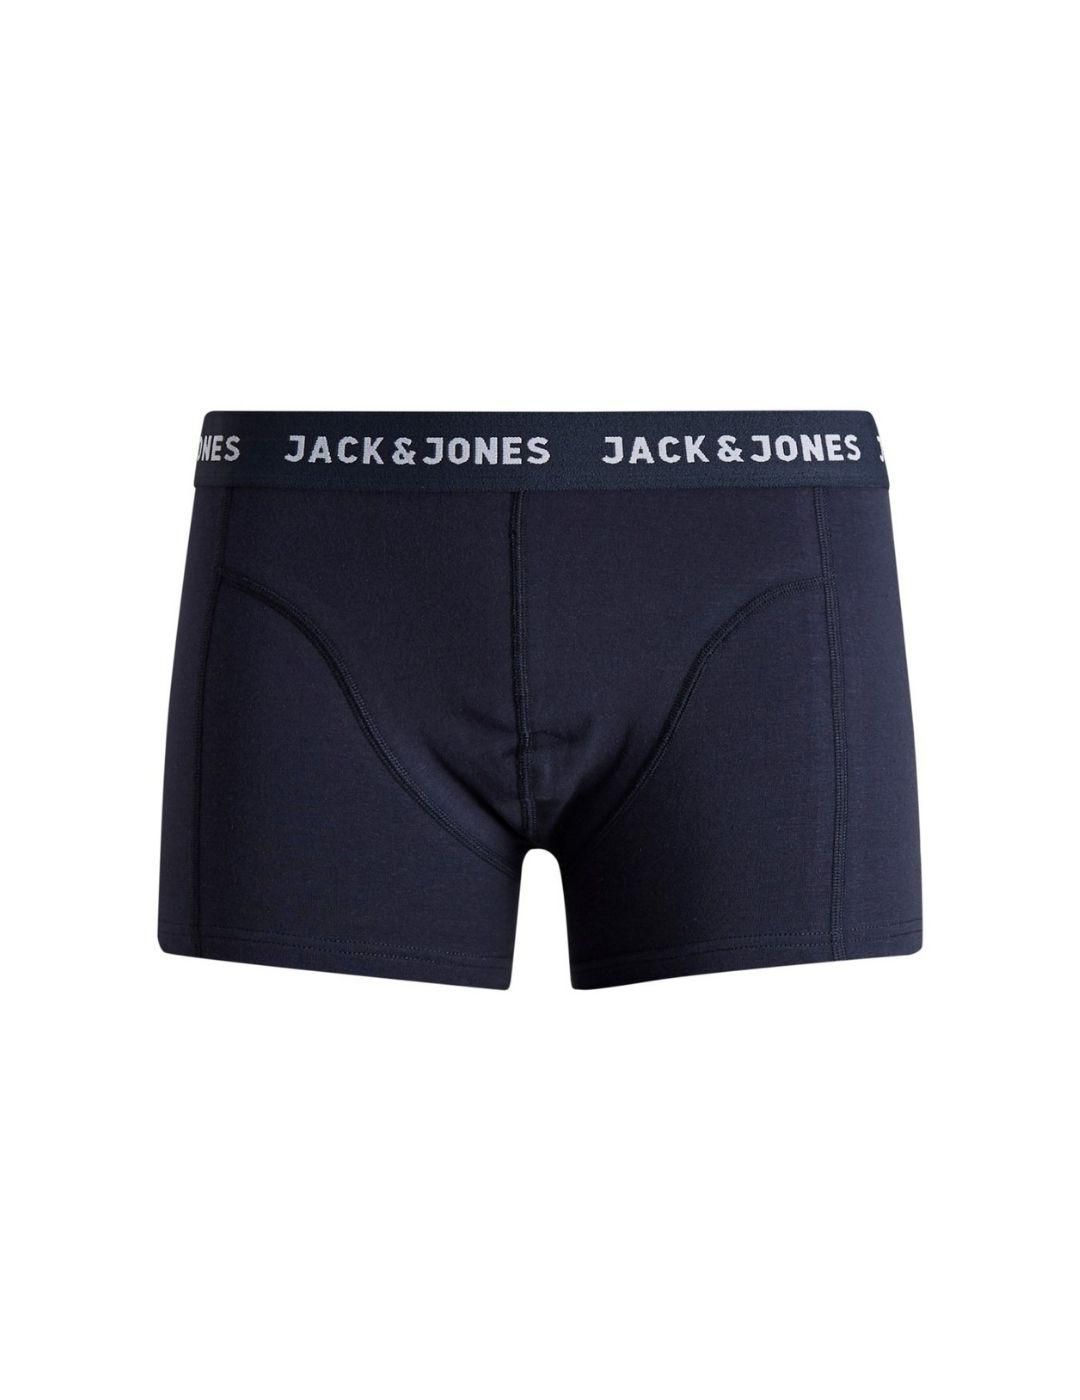 Boxer Jack and Jones Jacanthony Pack 3 - Bicos de Fío